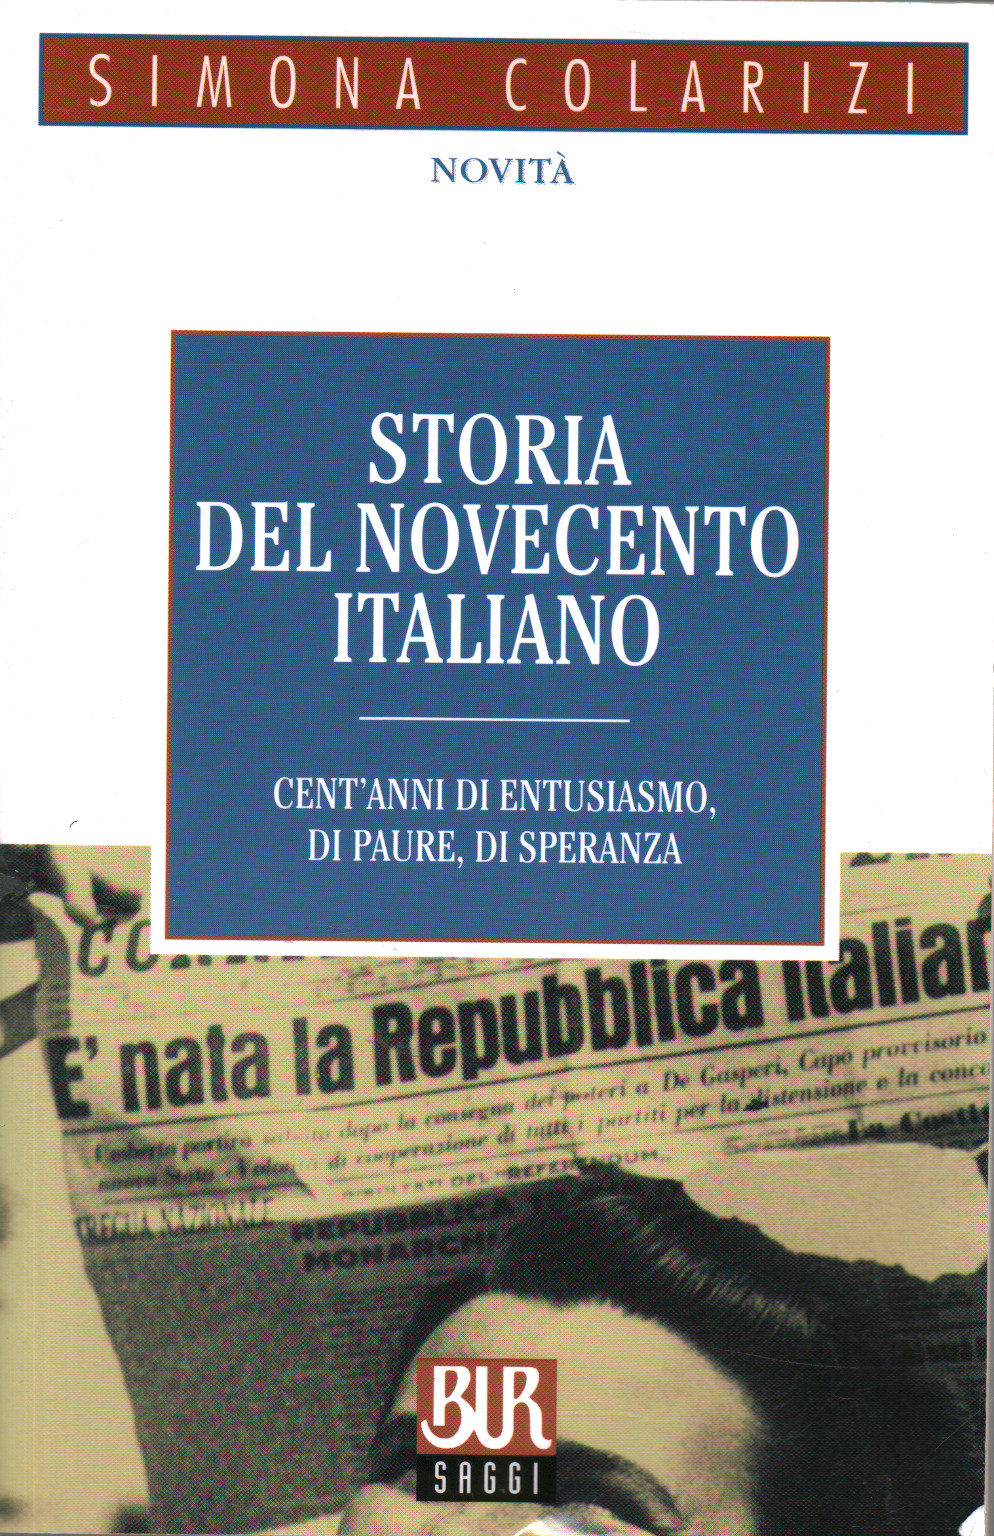 La historia de la italia del siglo Xx, Simona Colarizi